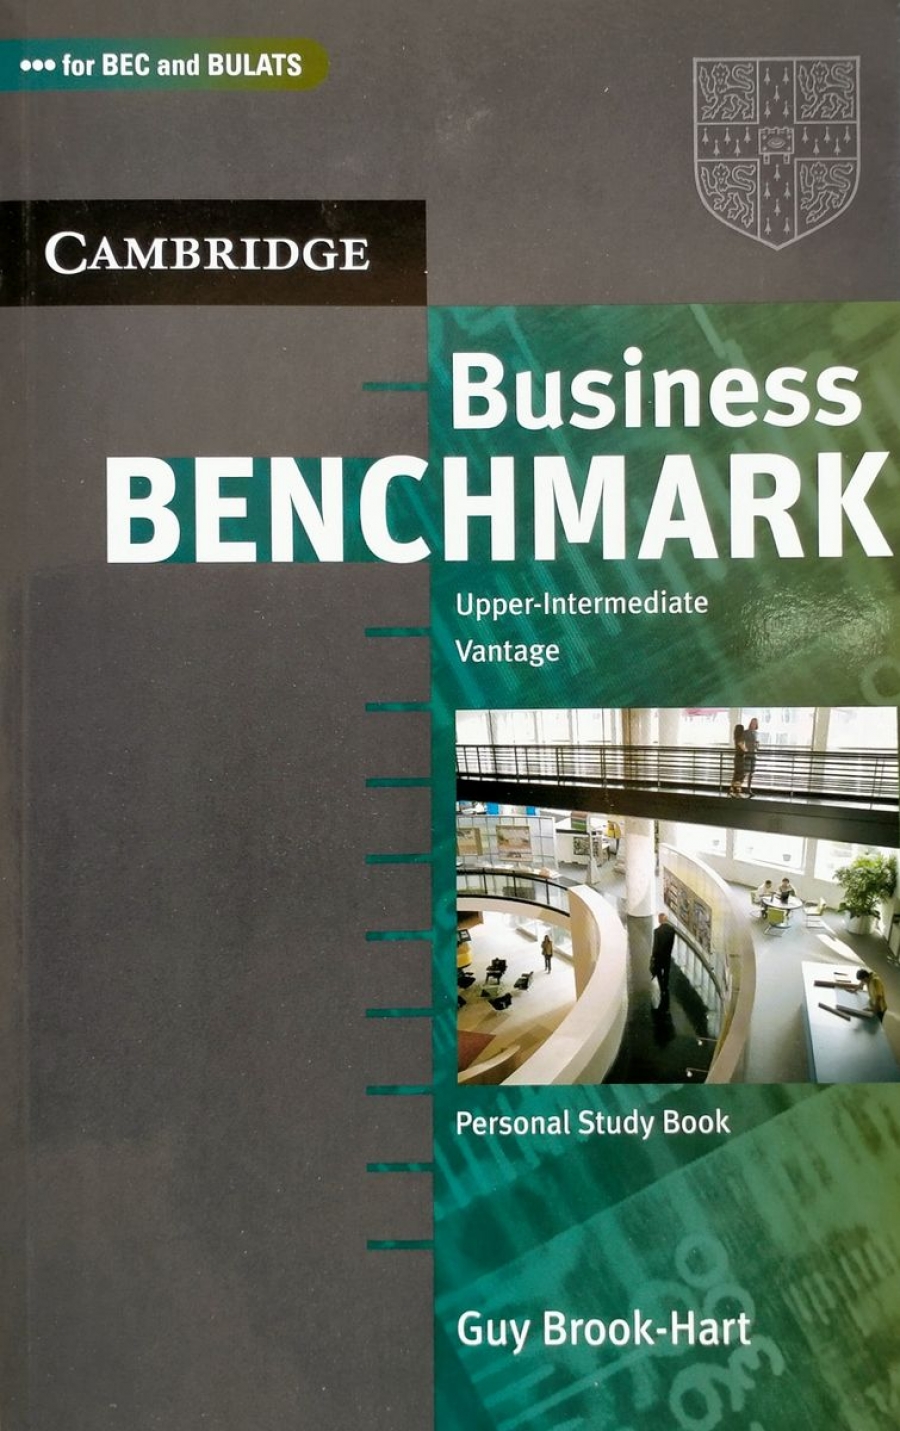 Guy Brook-Hart Business Benchmark Upper Intermediate Personal Study Book BEC and BULATS edition 